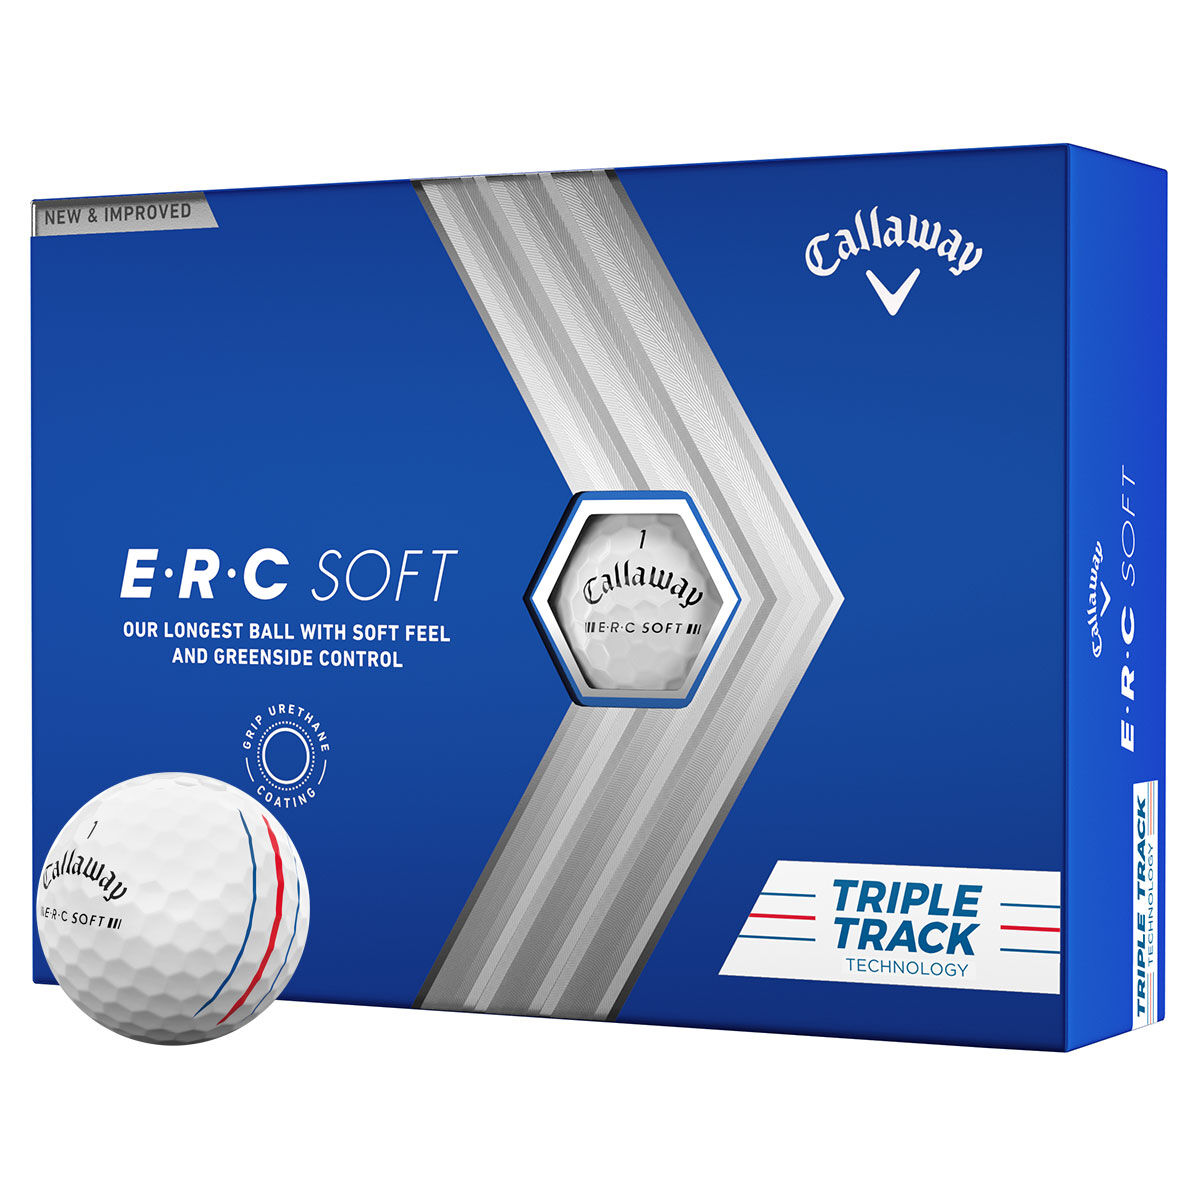 Callaway E.R.C Soft Triple Track 12 Golf Balls, Male, White  | Online Golf